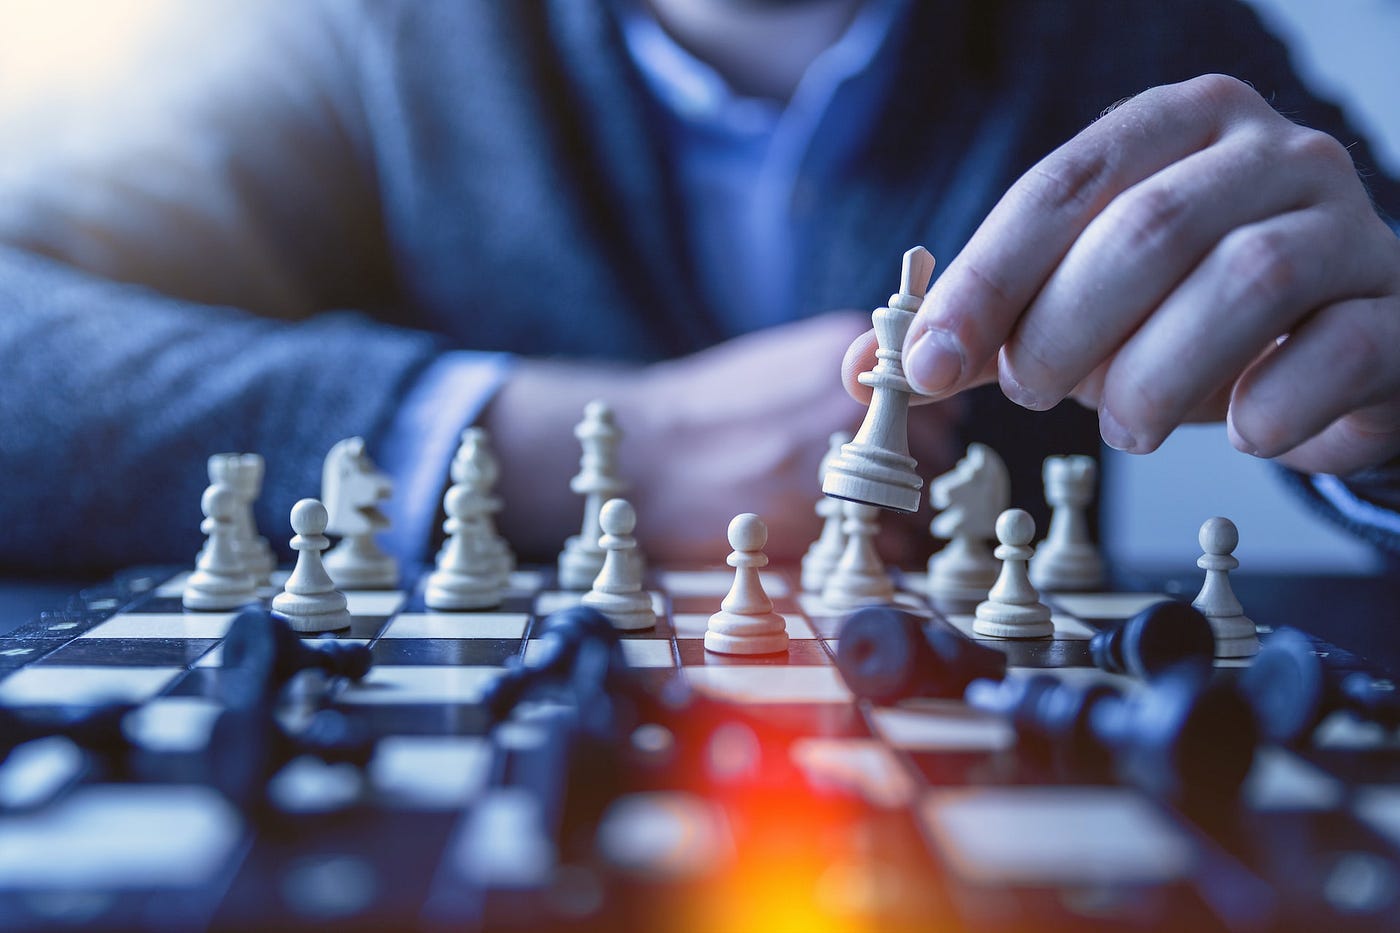 Prática de xadrez cresce durante a pandemia e oferece benefícios